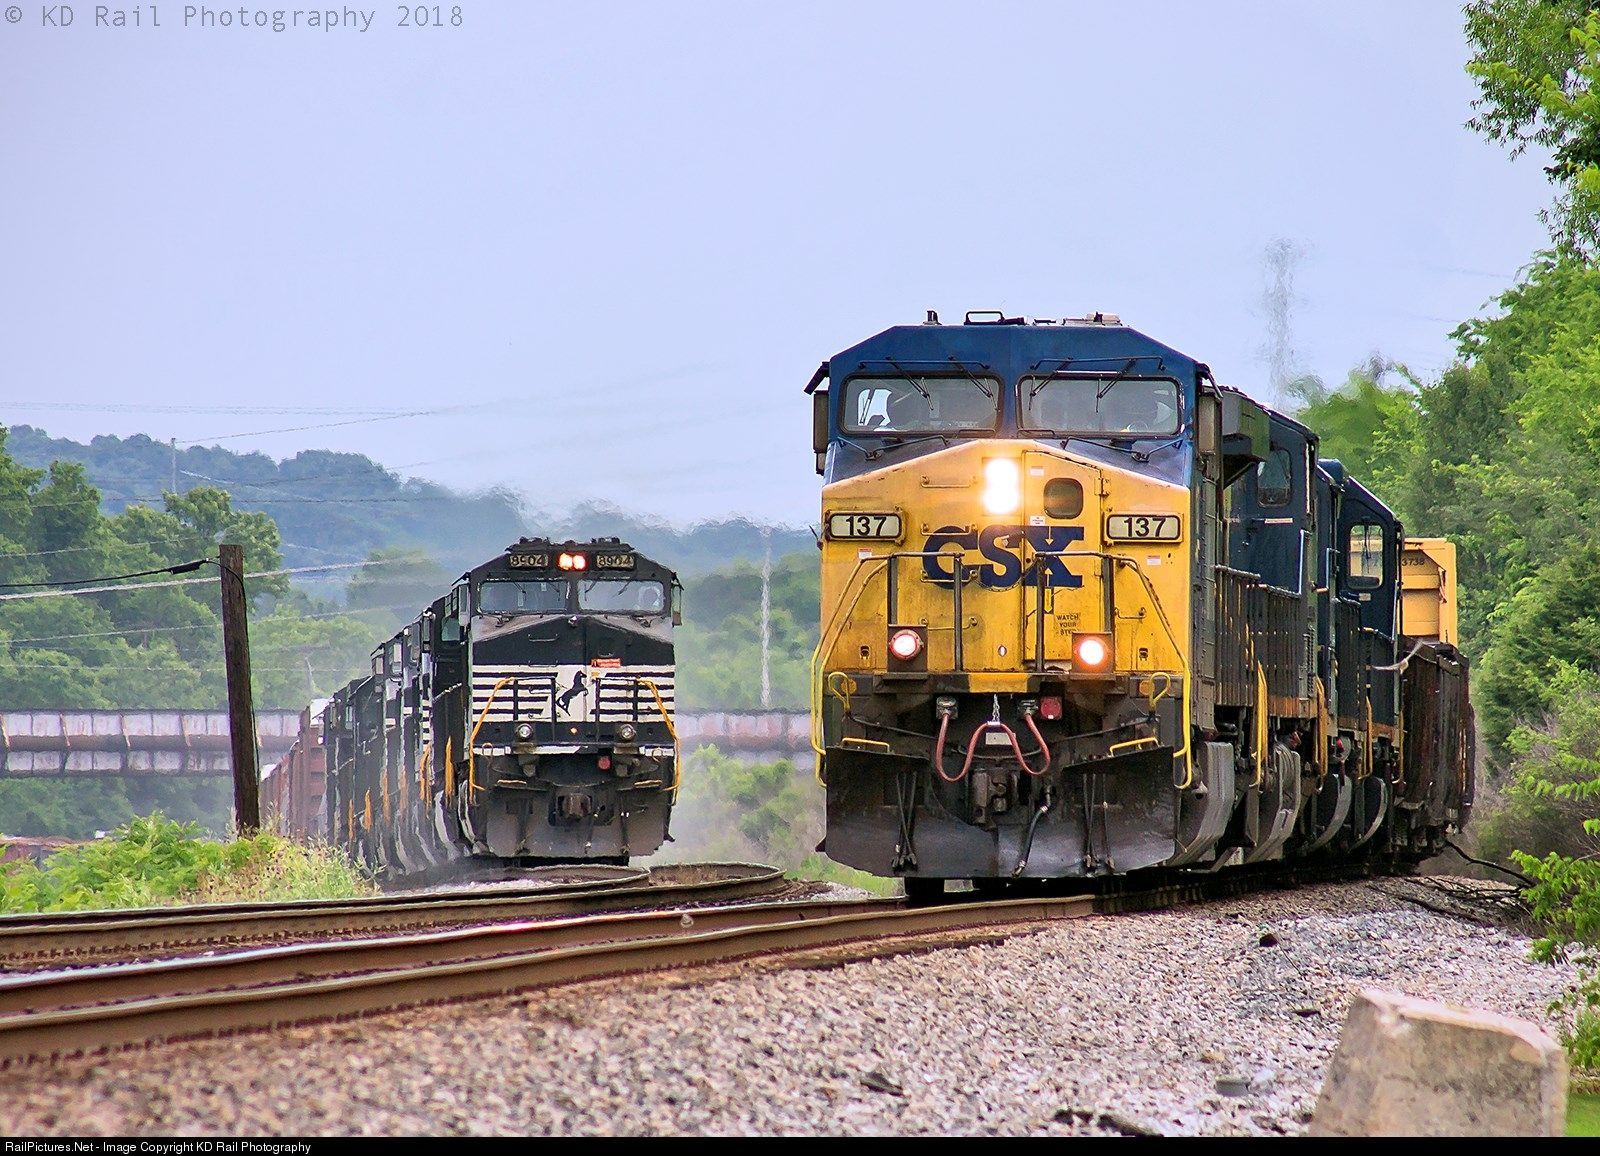 RailPicture.Net Photo: CSXT 137 CSX Transportation (CSXT) GE AC4400CW at Chattanooga, Tennessee by KD Ra. Csx transportation, Railroad photography, Train journey